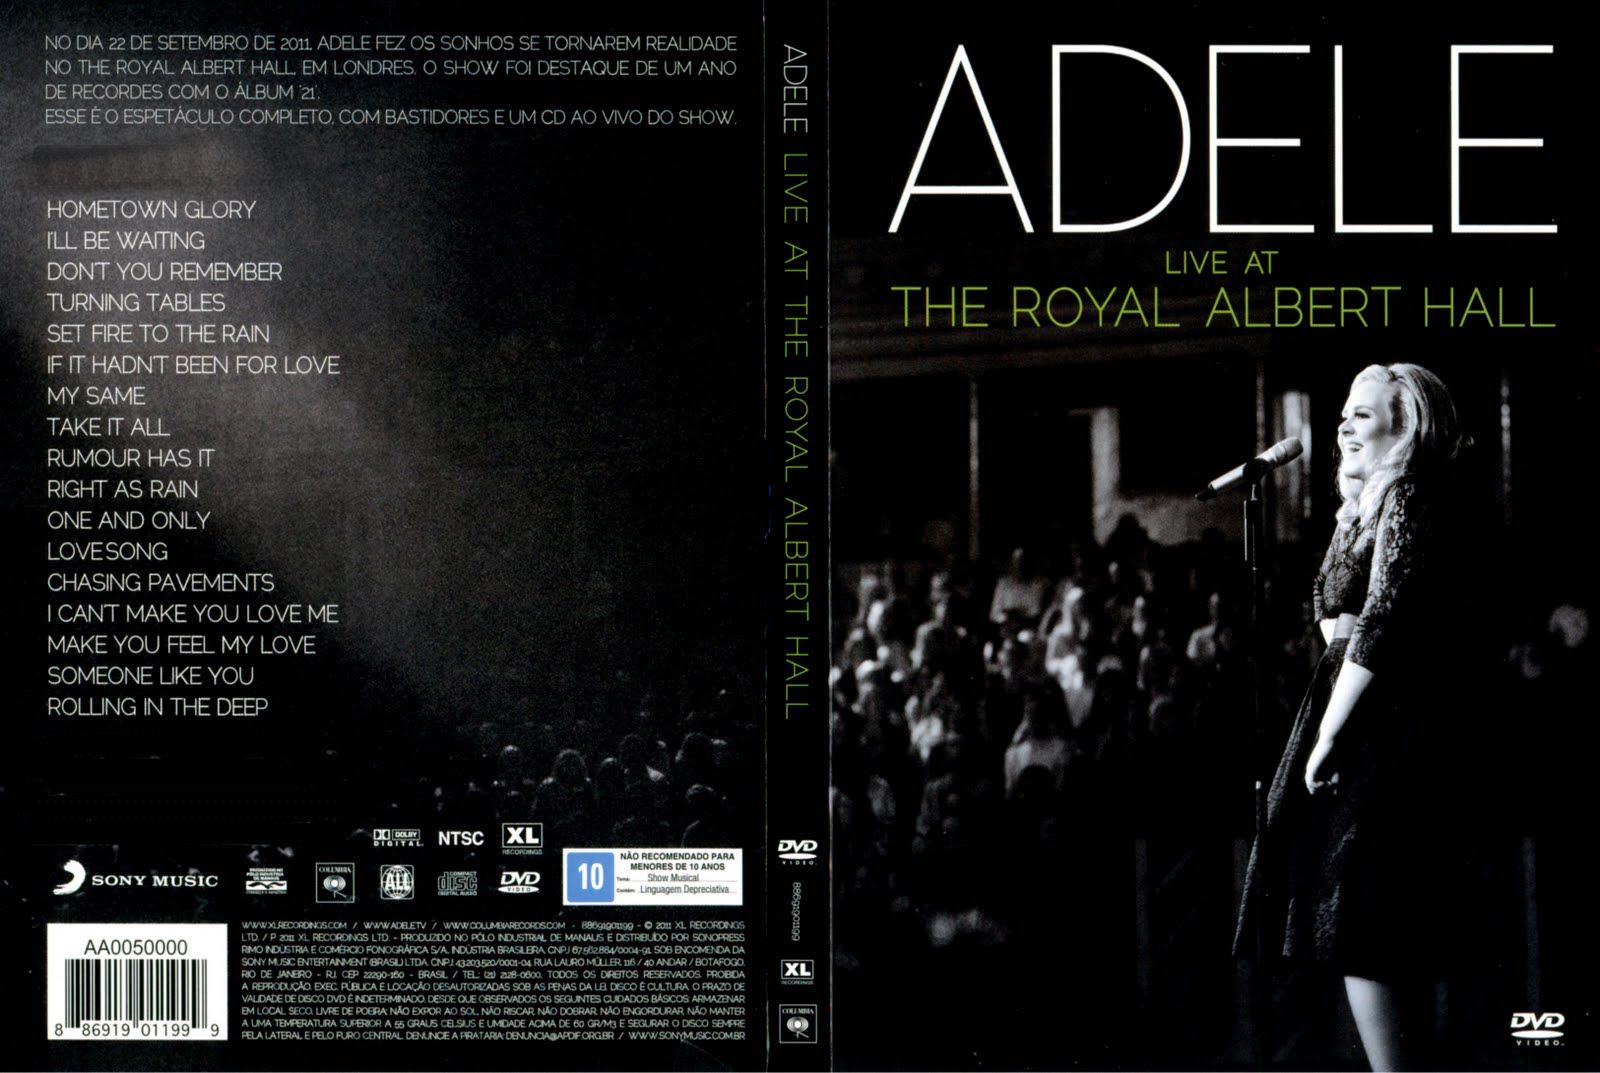 http://2.bp.blogspot.com/-Je3mev2Sdco/T06rxTQQImI/AAAAAAAAARw/NMzq6bsL5Jc/s1600/Adele+-+Live+At+The+Royal+Albert+Hall.jpg